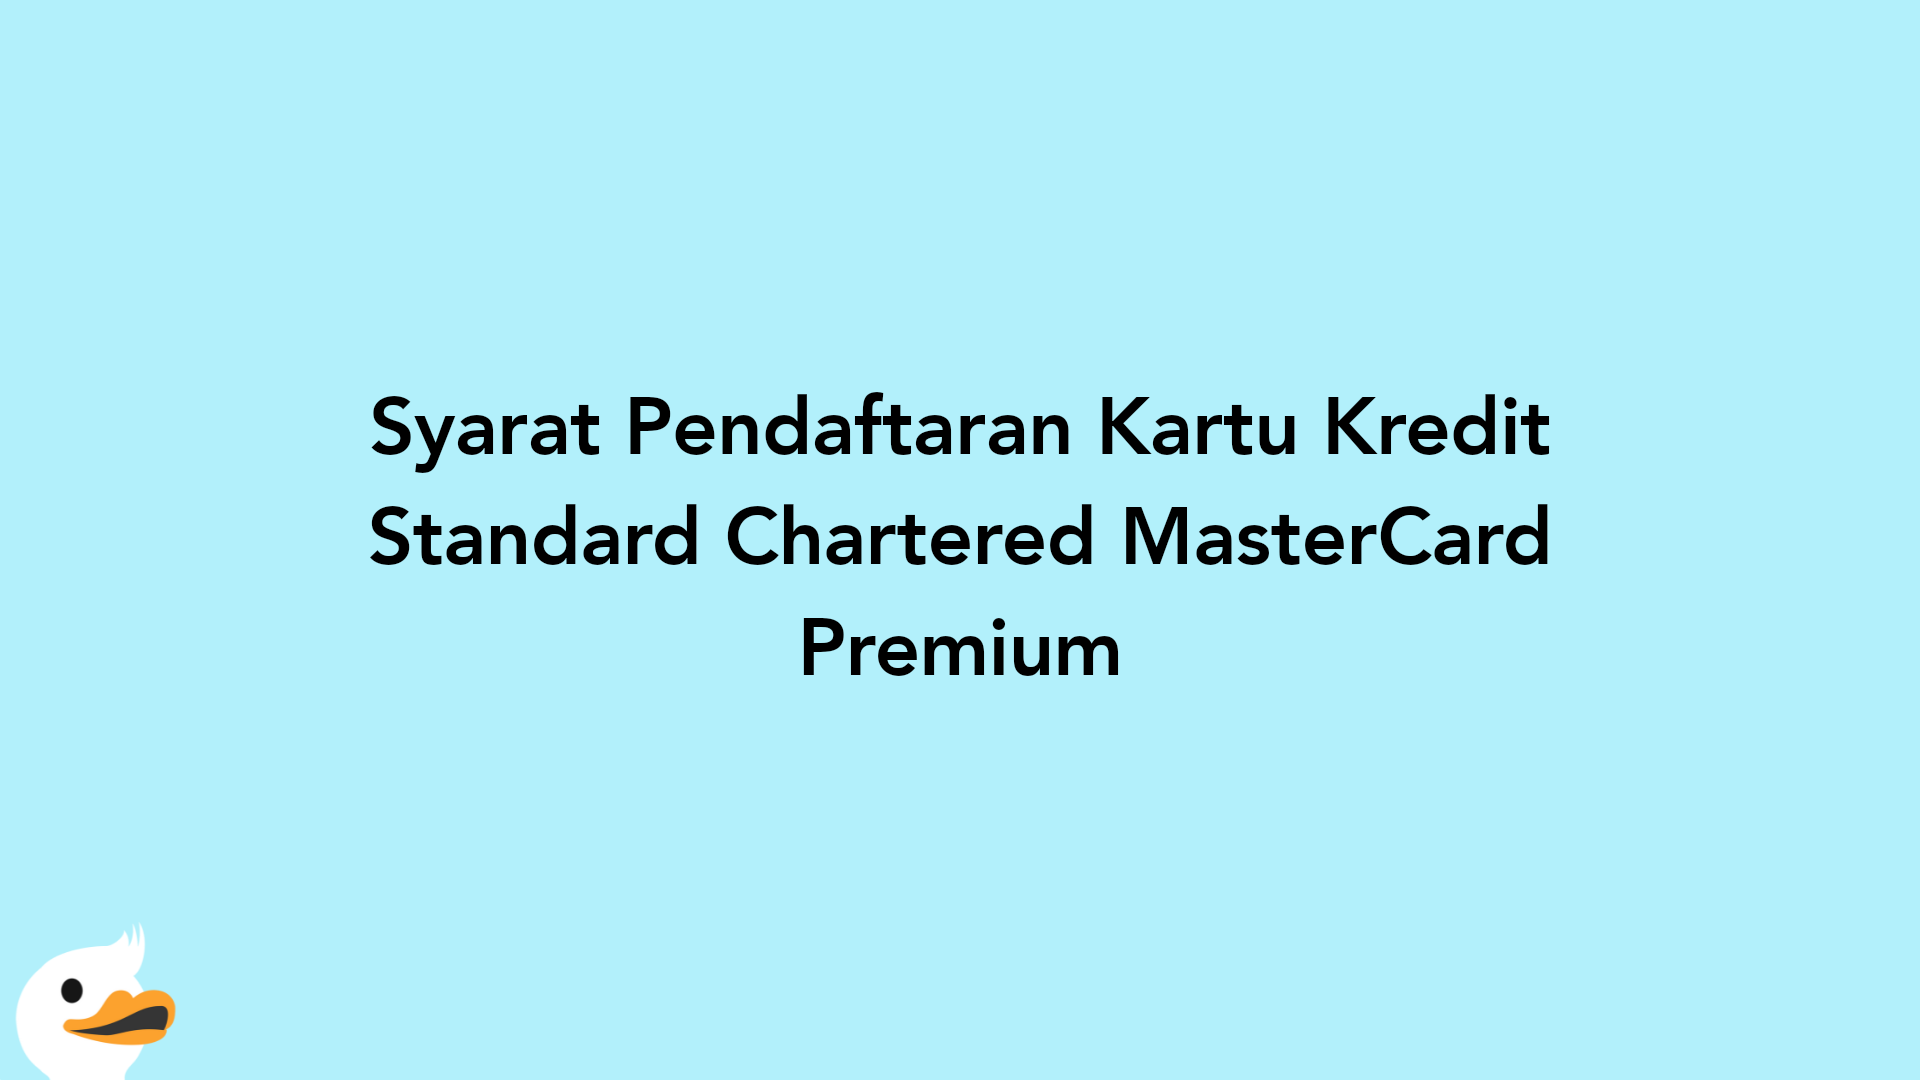 Syarat Pendaftaran Kartu Kredit Standard Chartered MasterCard Premium